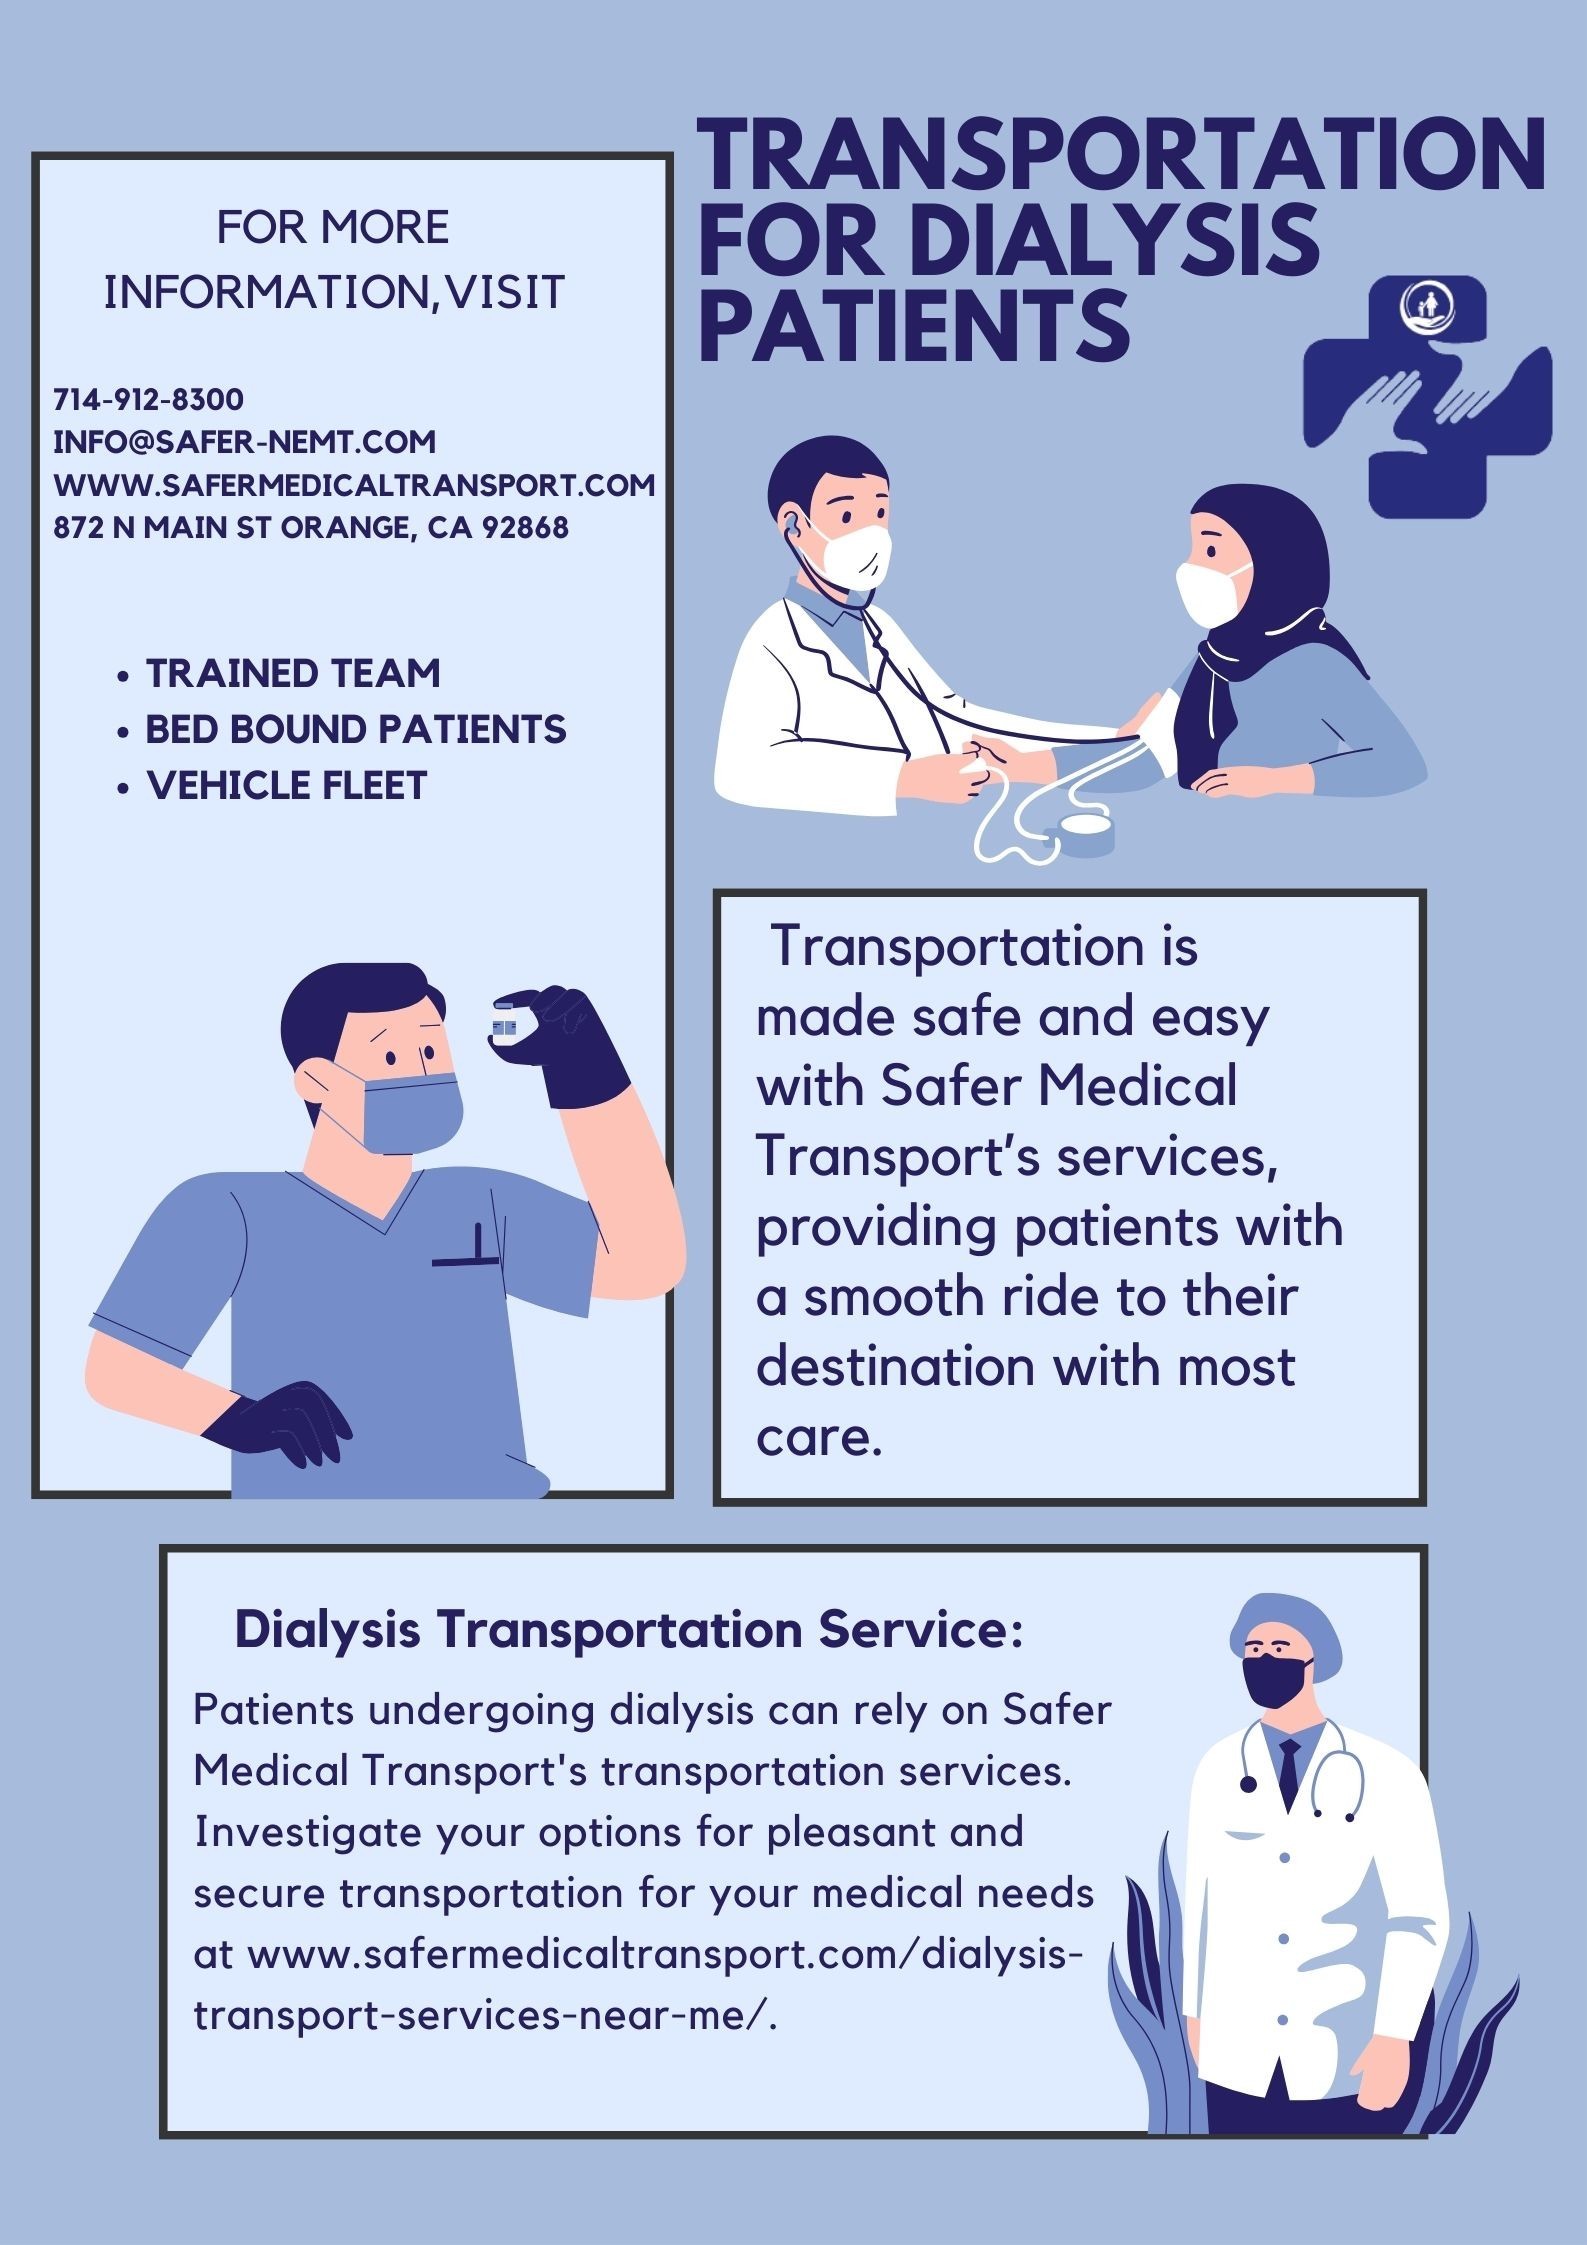 Transportation for Dialysis Patients - safermedicaltransport.com